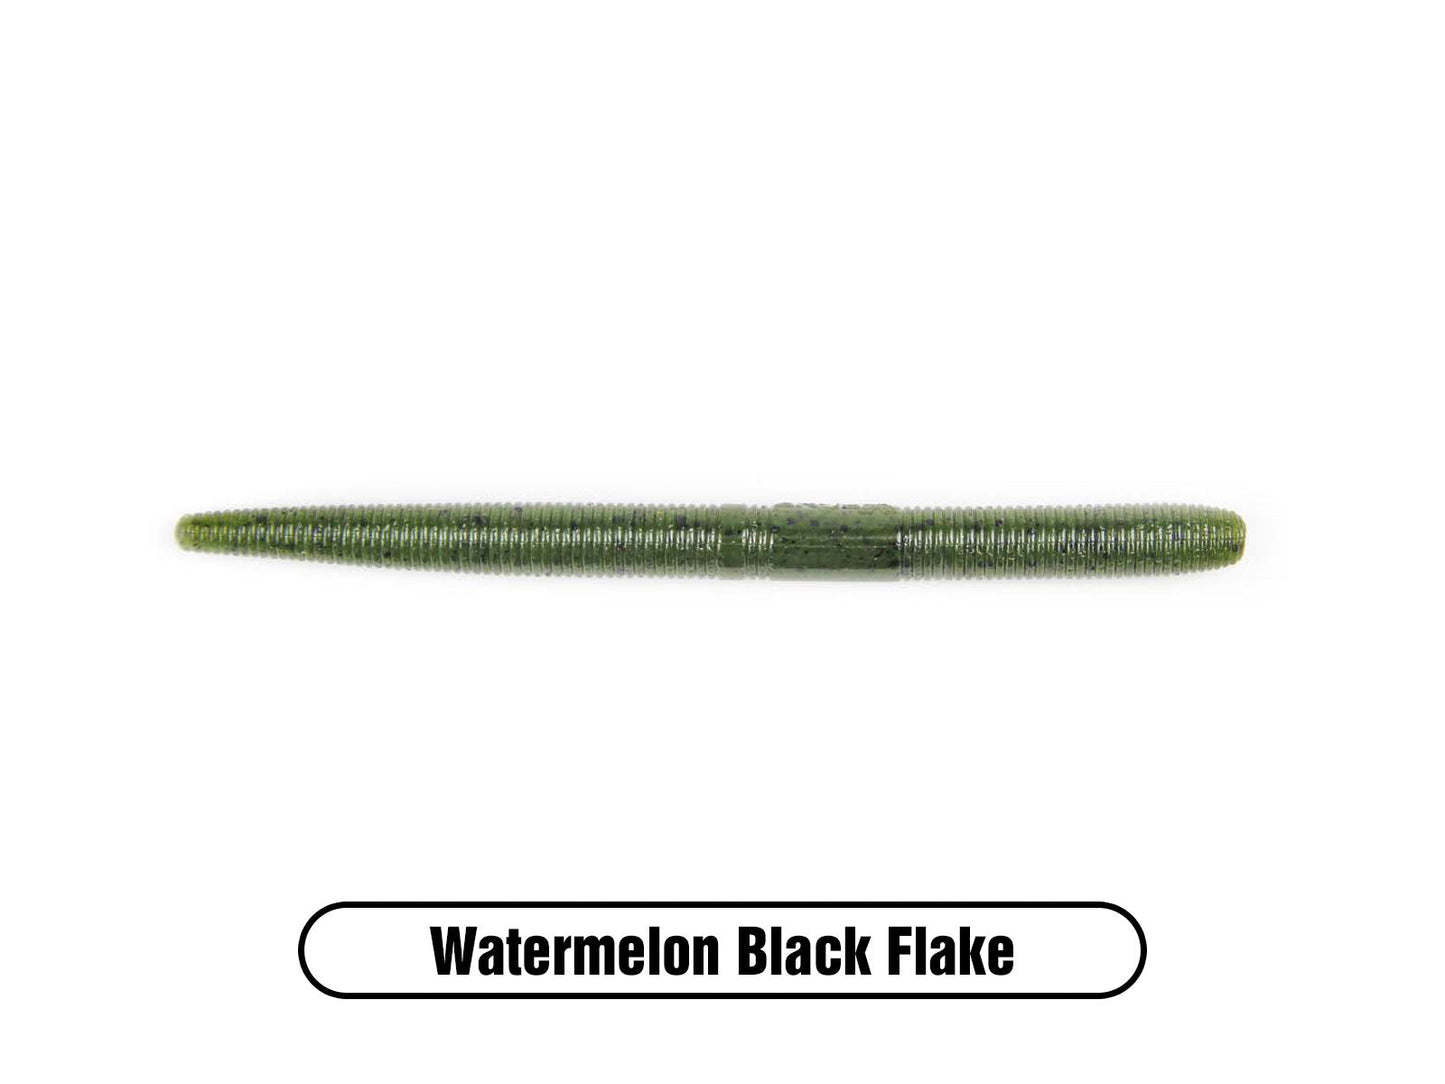 Soft Plastic Stick Worm Bait for Largemouth Bass Fishing, Smallmouth Bass and Walleye Fishing Lure